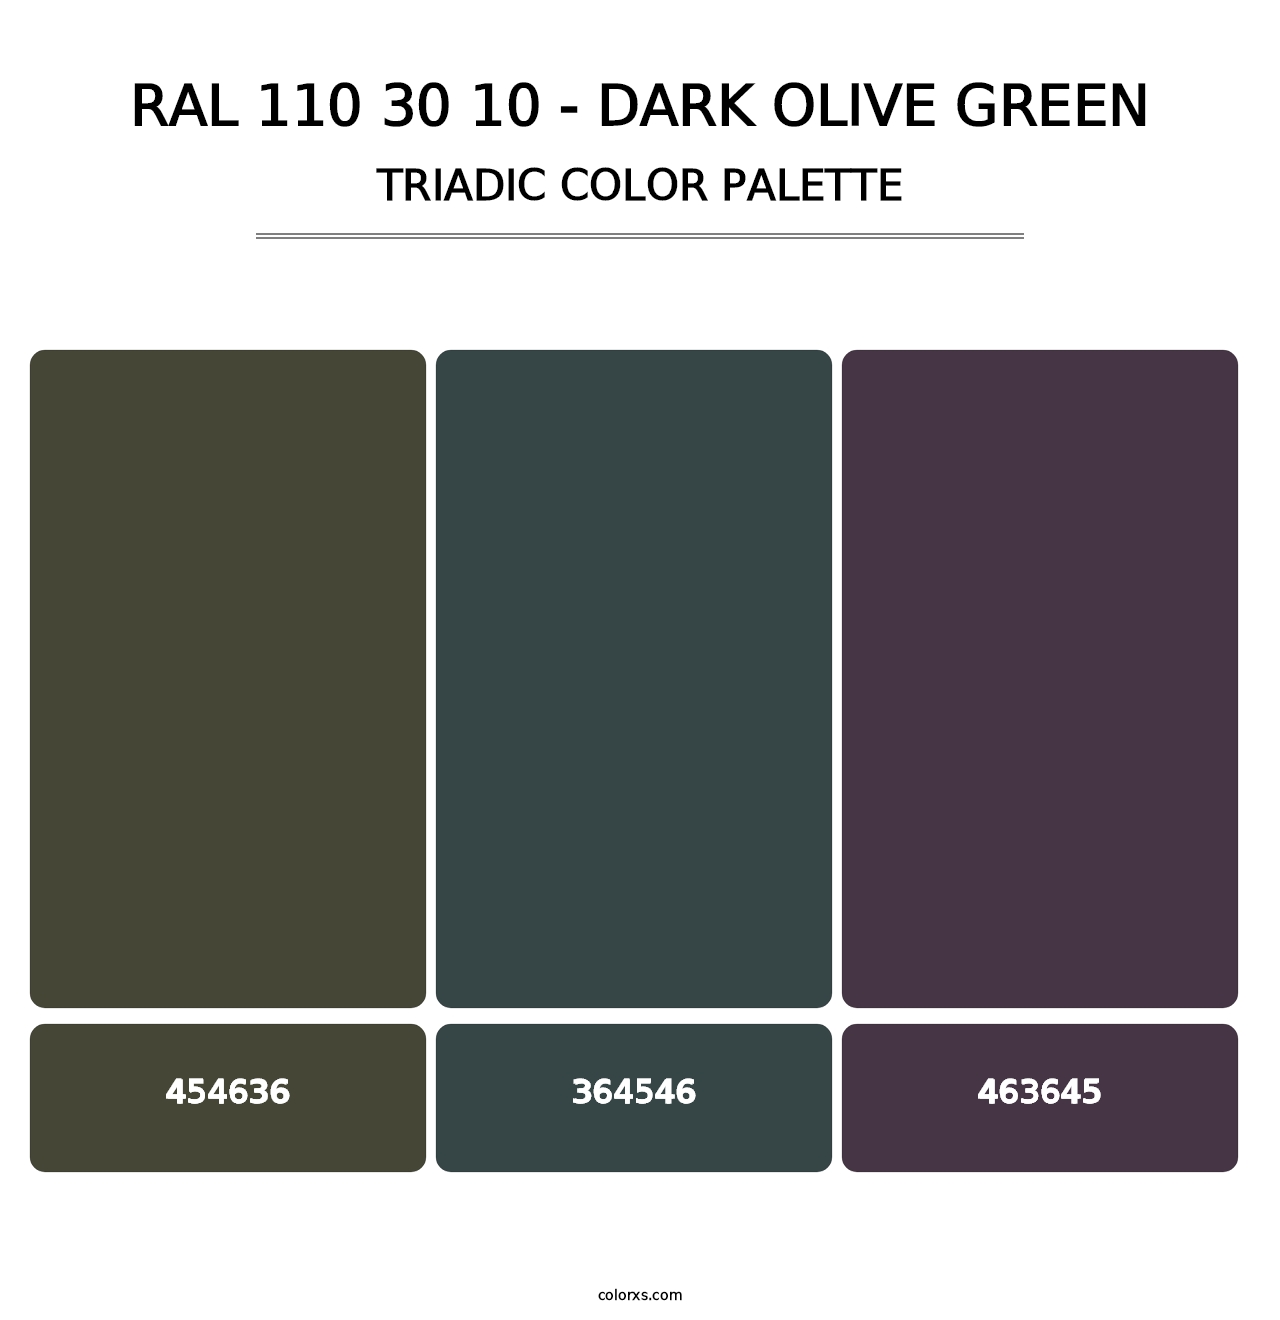 RAL 110 30 10 - Dark Olive Green - Triadic Color Palette